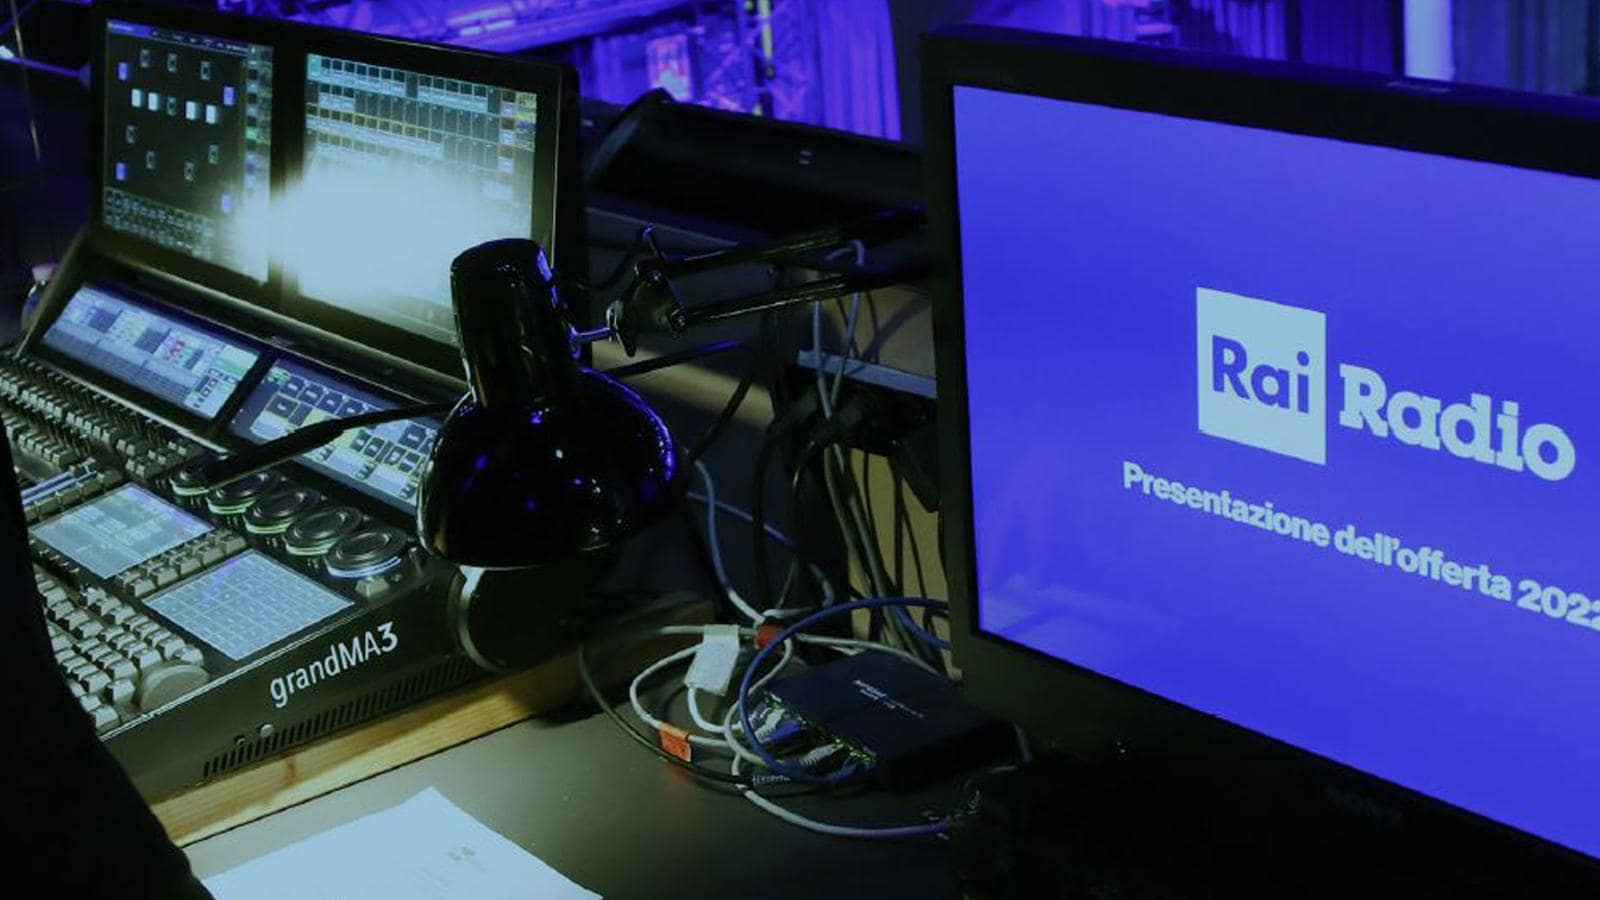 Rai Radio: in arrivo un “metastudio” e due nuovi studi audio-video